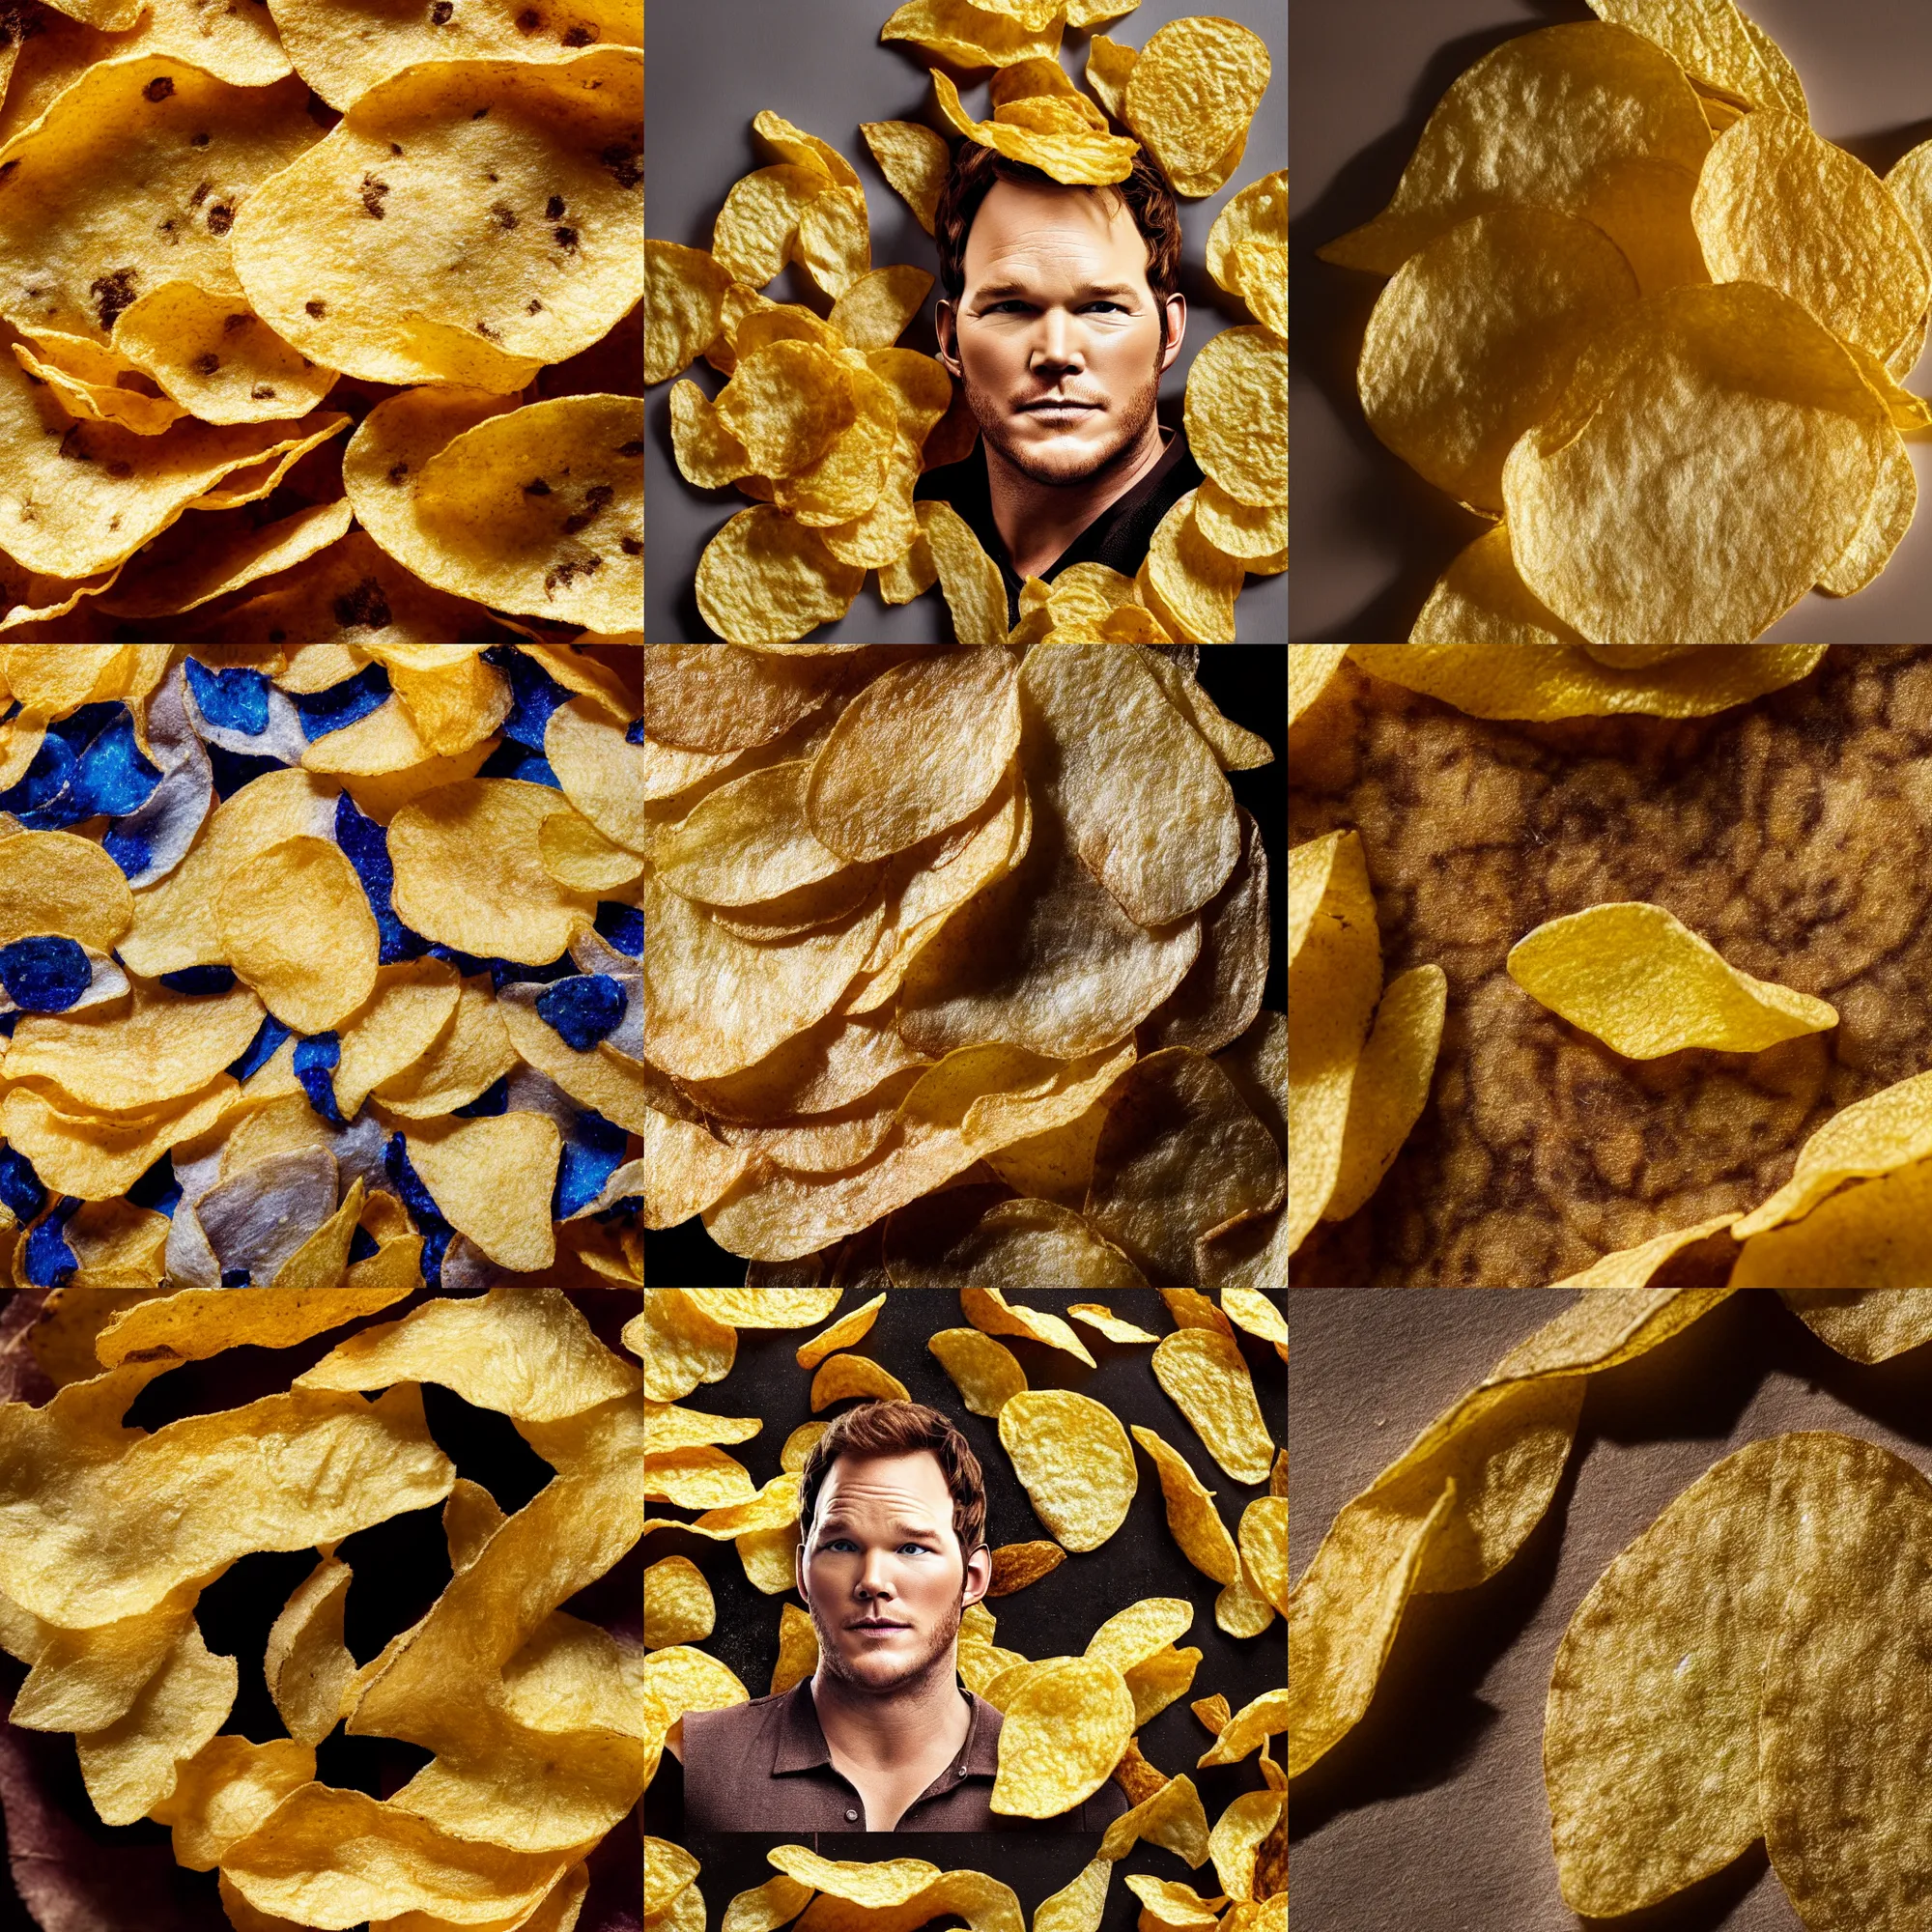 Prompt: chris pratt, potato chip style, potato chip looks like chris pratt's face, texture, crisp, macro shot, high detail photo, close up